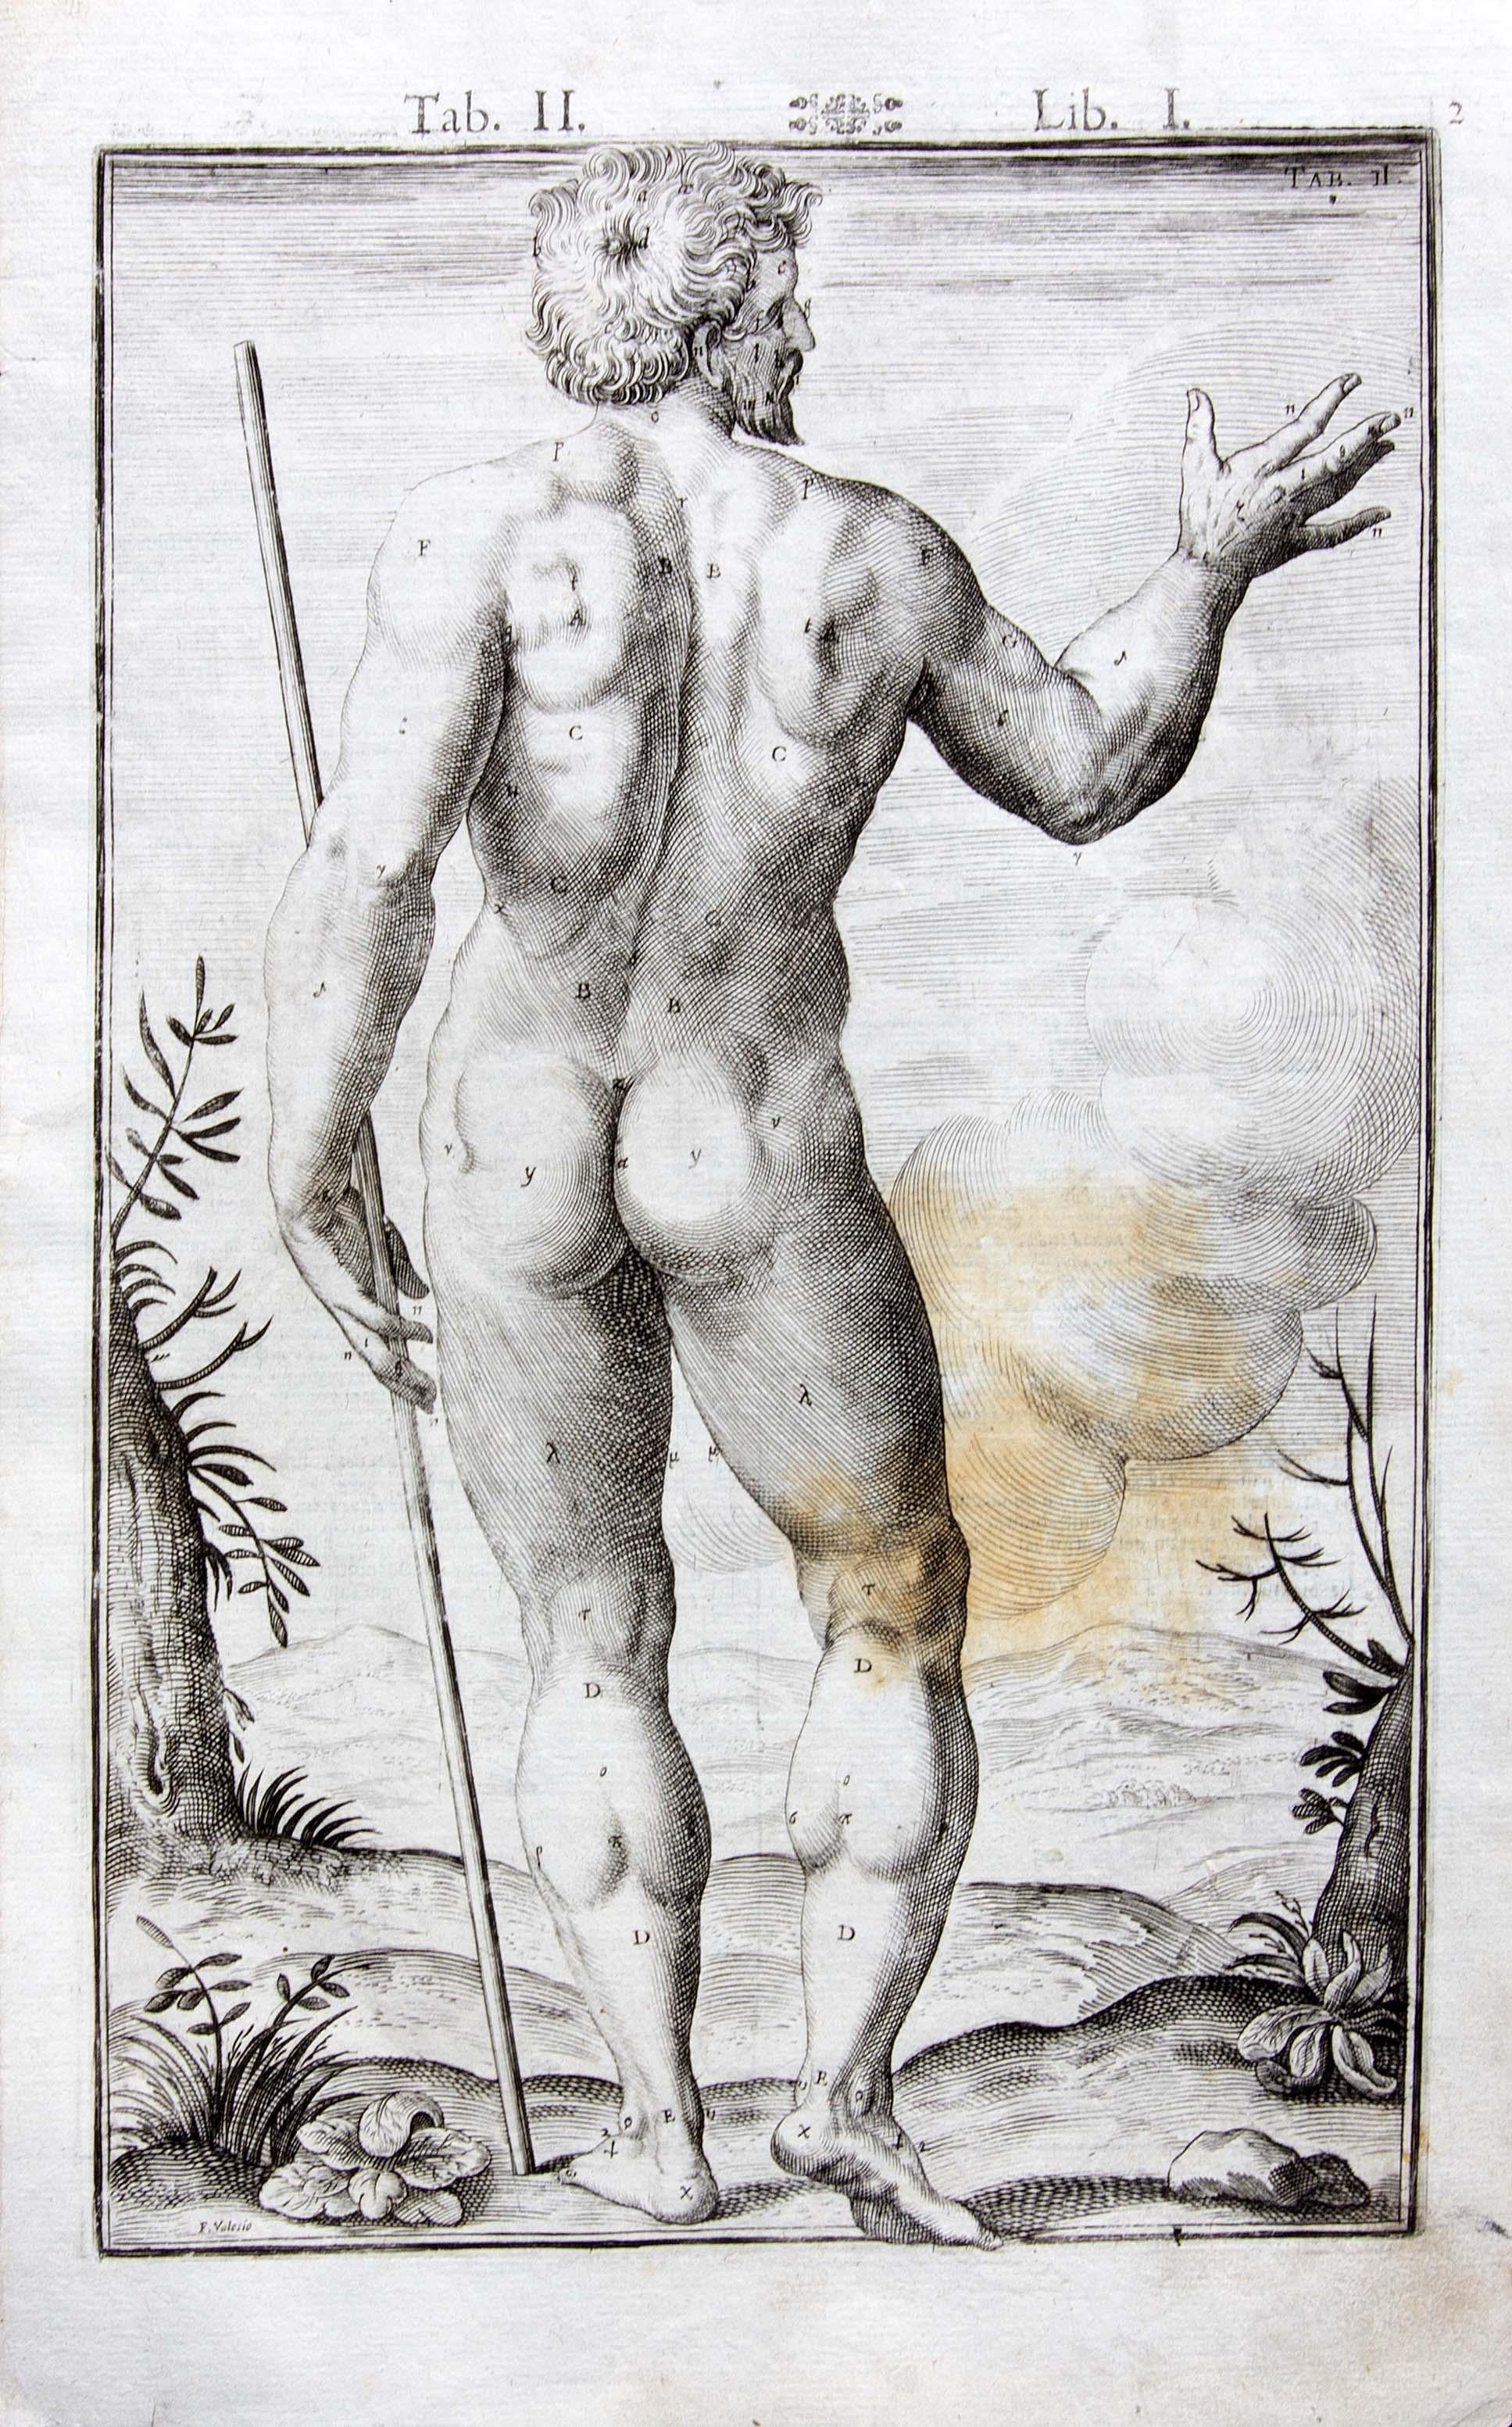 17th century anatomy